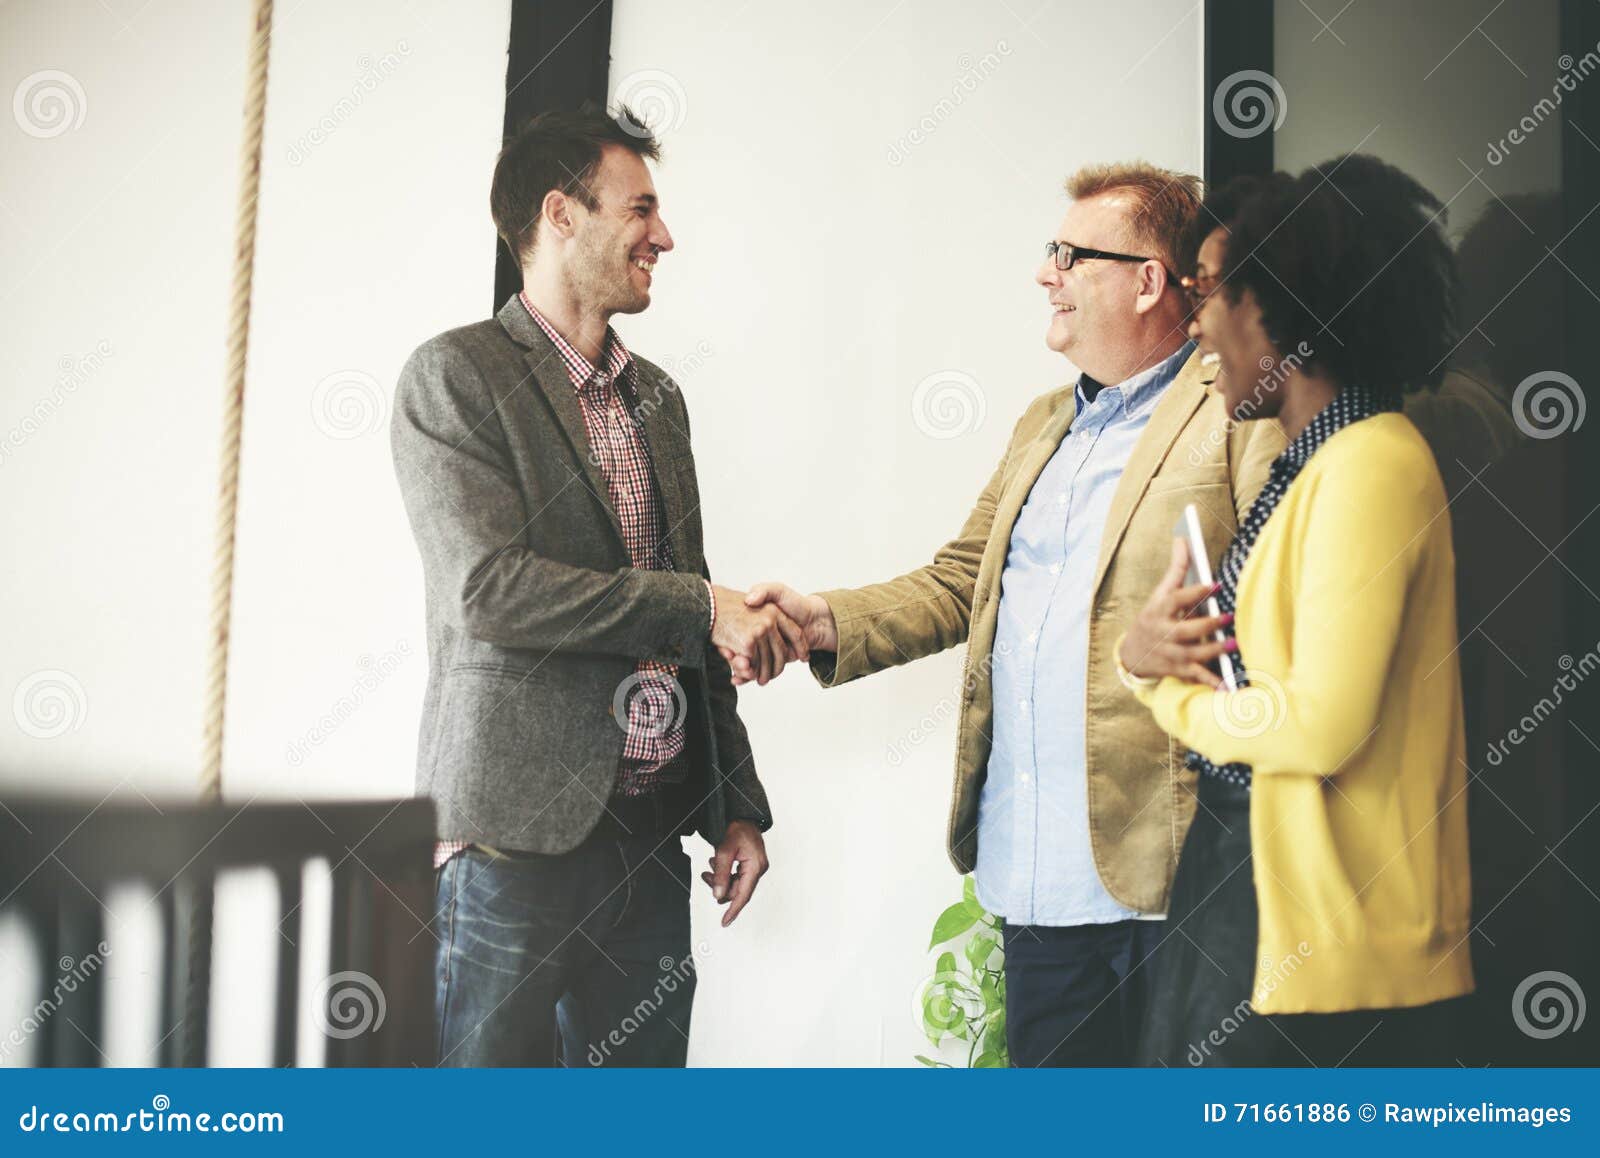 business people meeting corporate handshake greeting concept